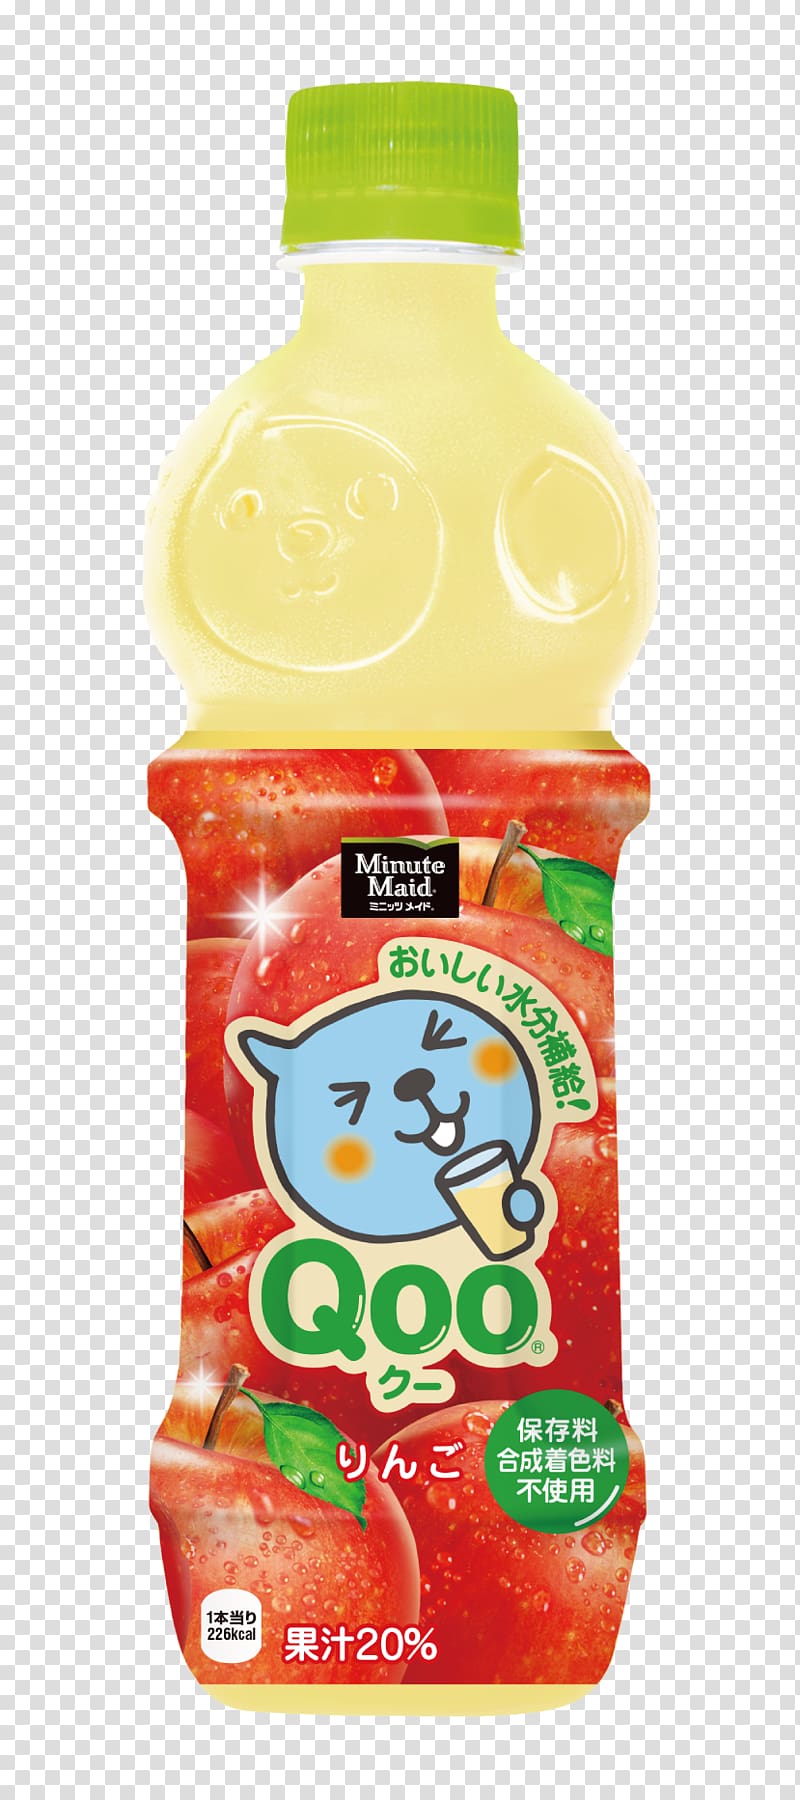 Coca-Cola Apple juice Orange drink Qoo, news center transparent background PNG clipart